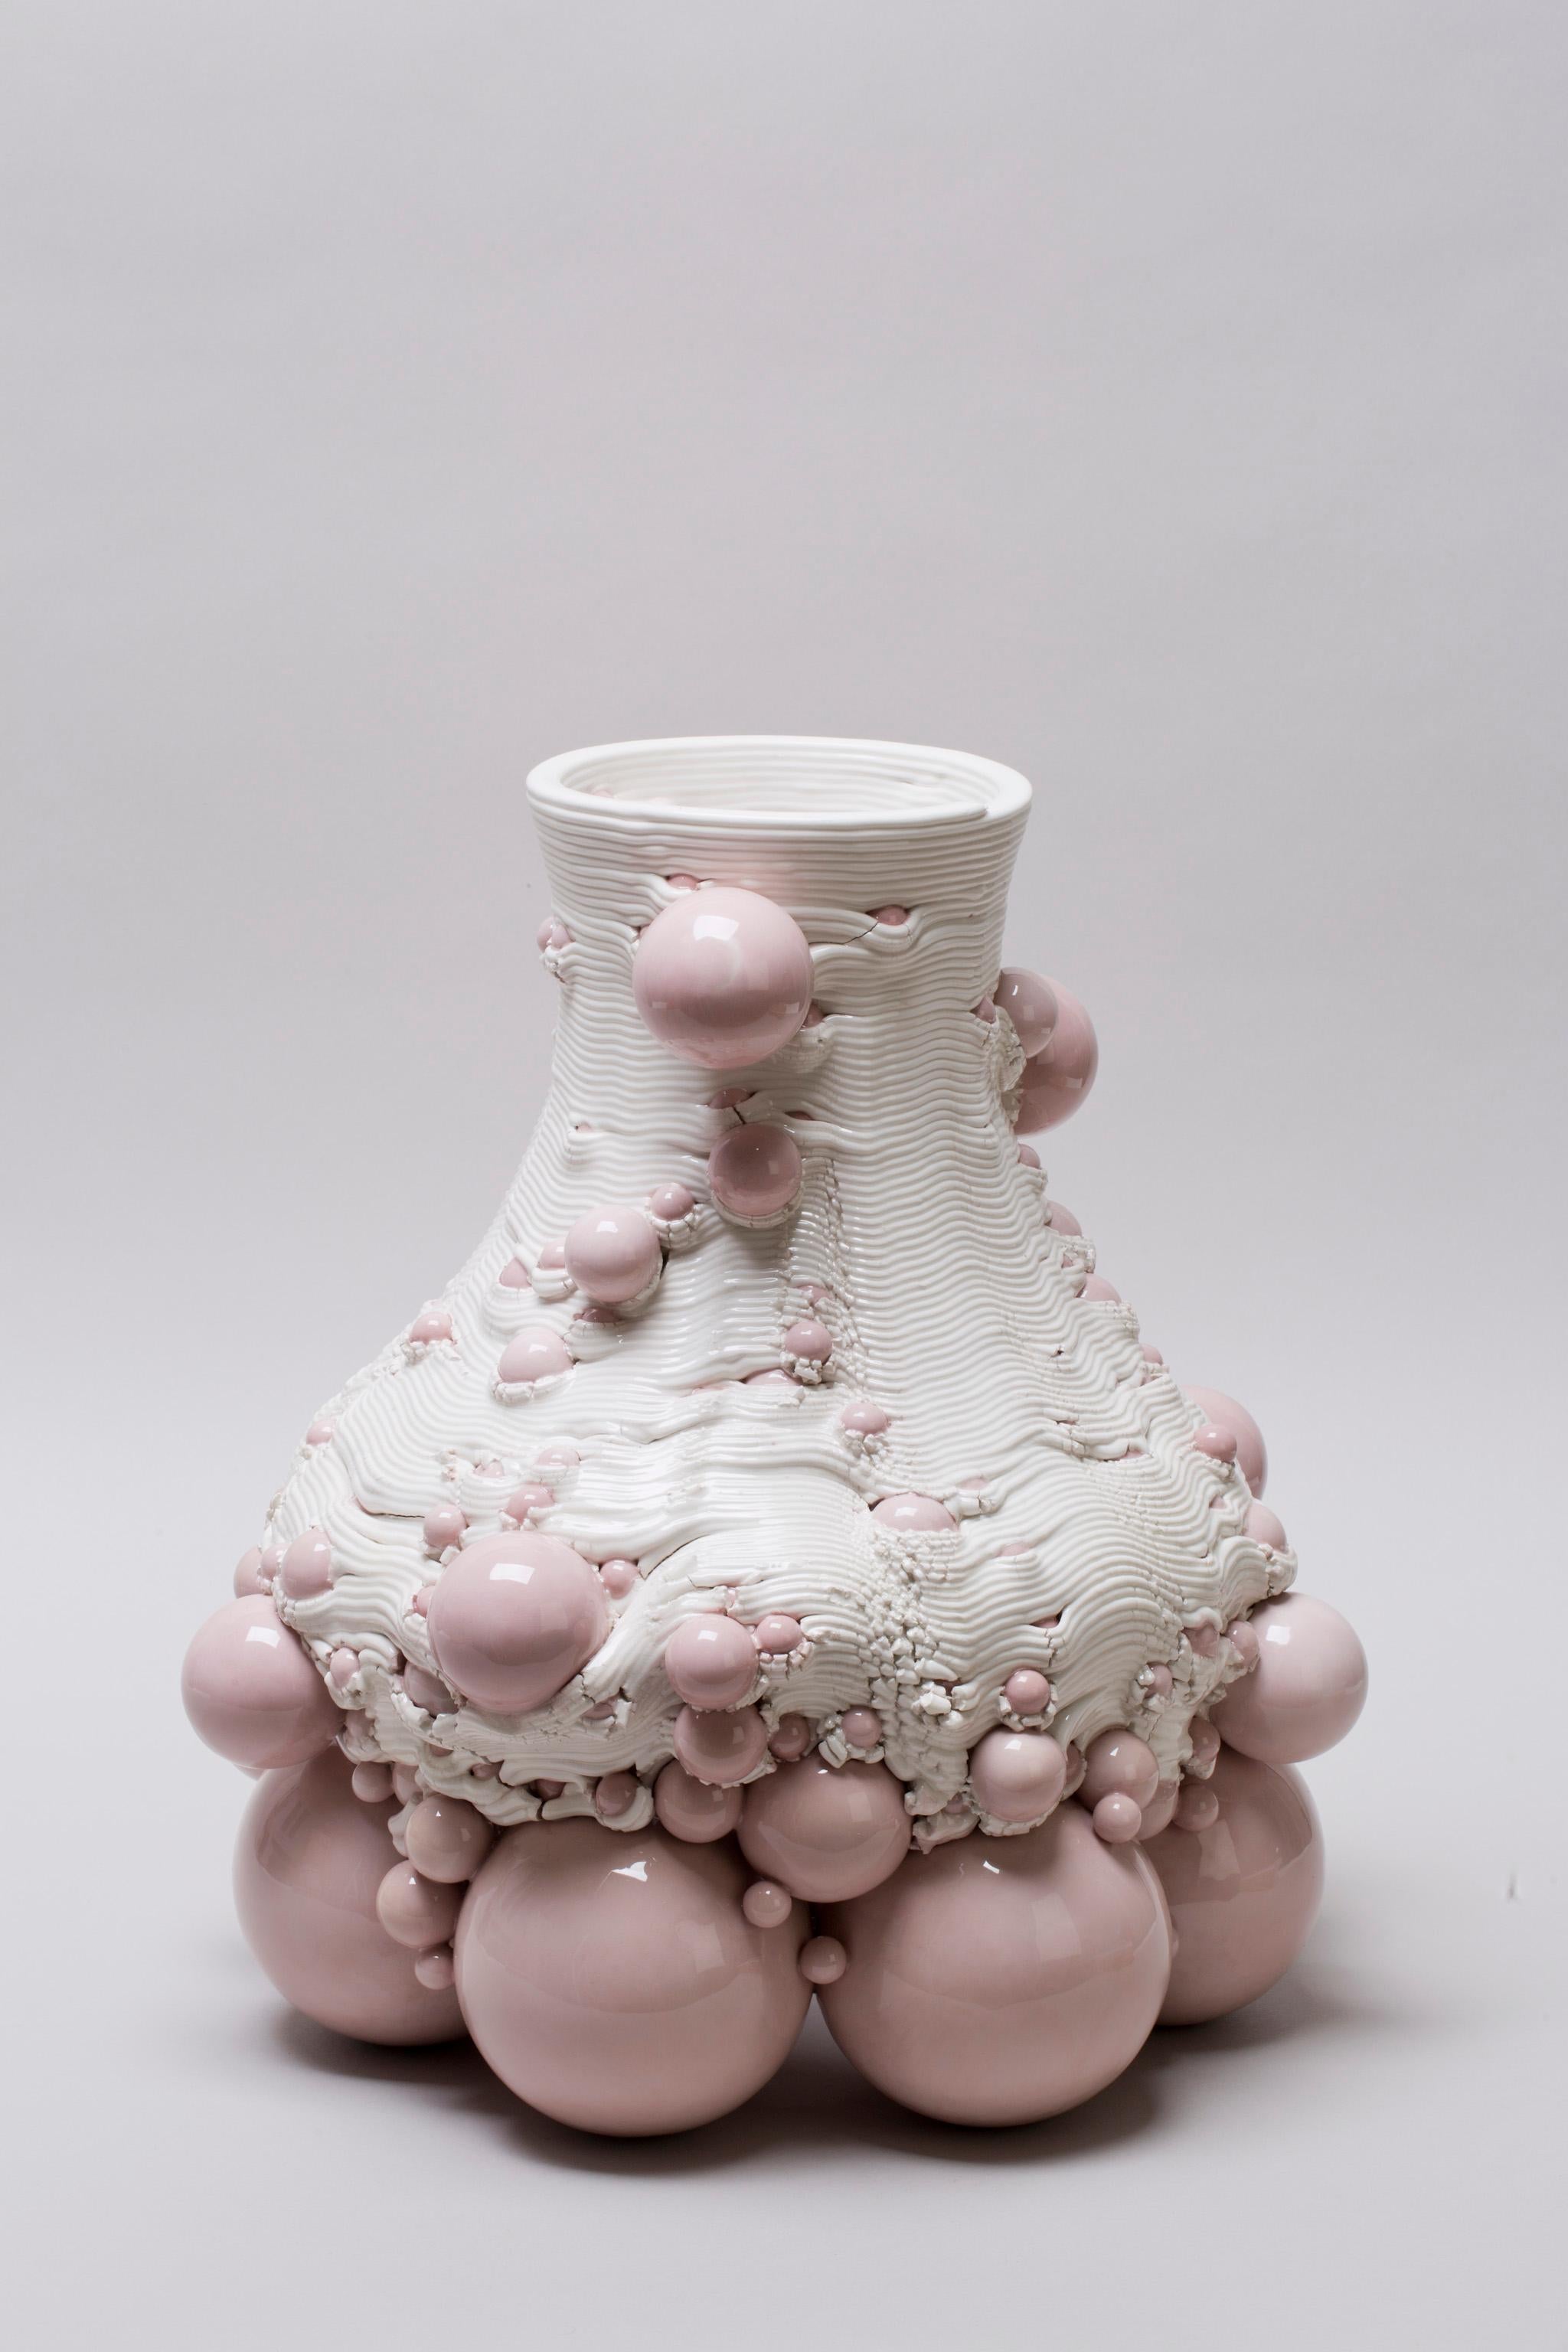 Glazed White Ceramic Sculptural Vase Italian Contemporary, 21st Century contemporary For Sale